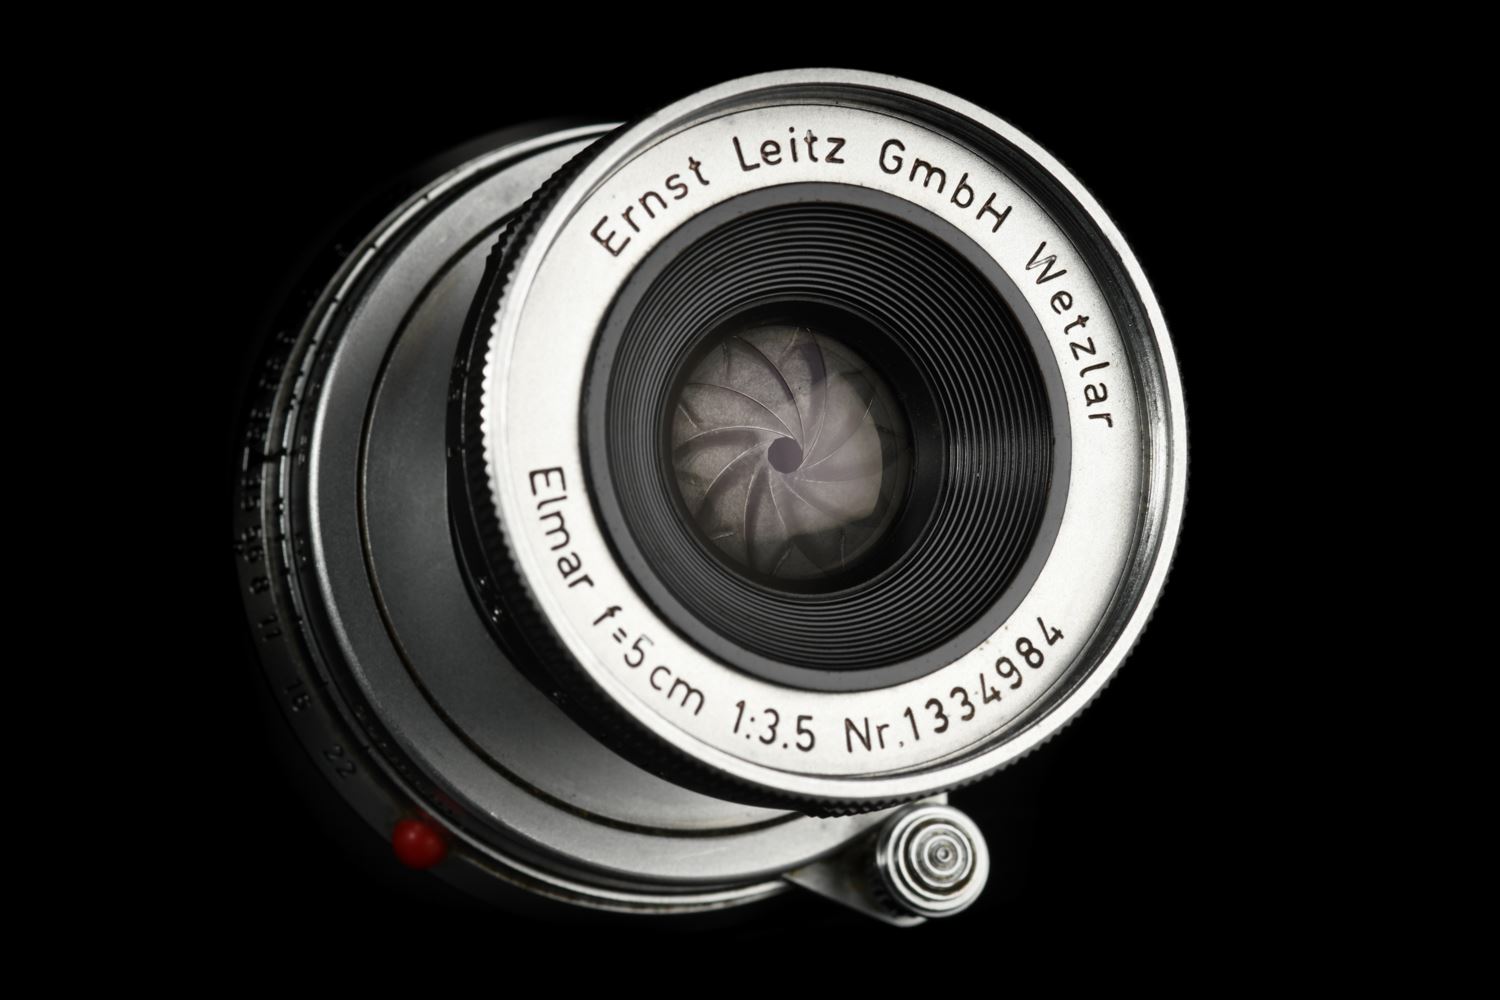 Picture of Leica M3 Olive First Batch with Elmar 5cm f/3.5 Bundeseigentum